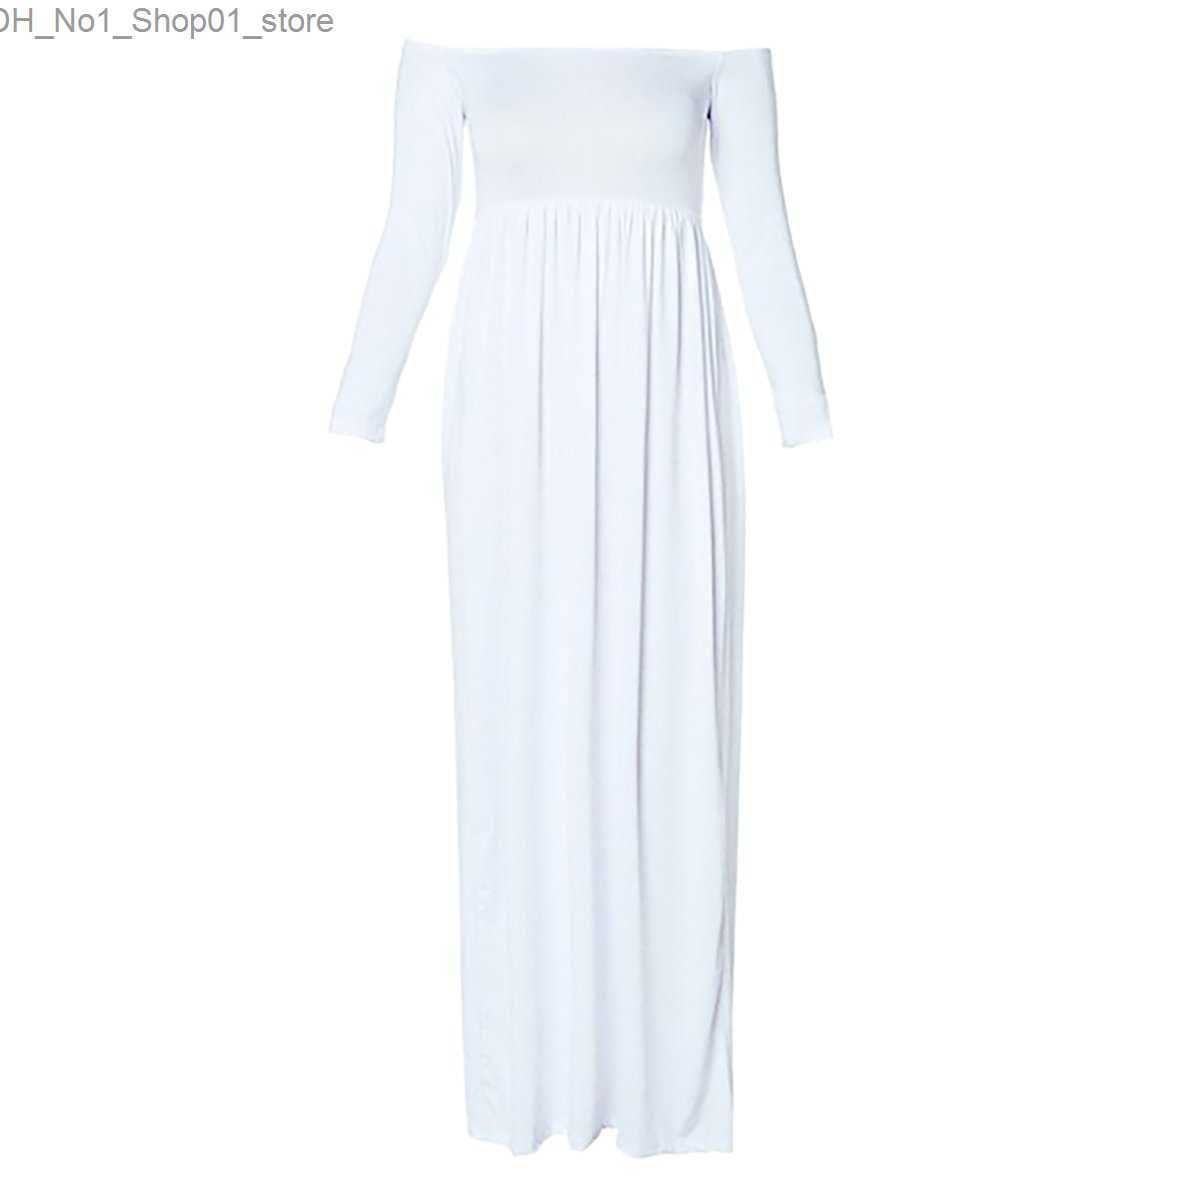 1 x white dress